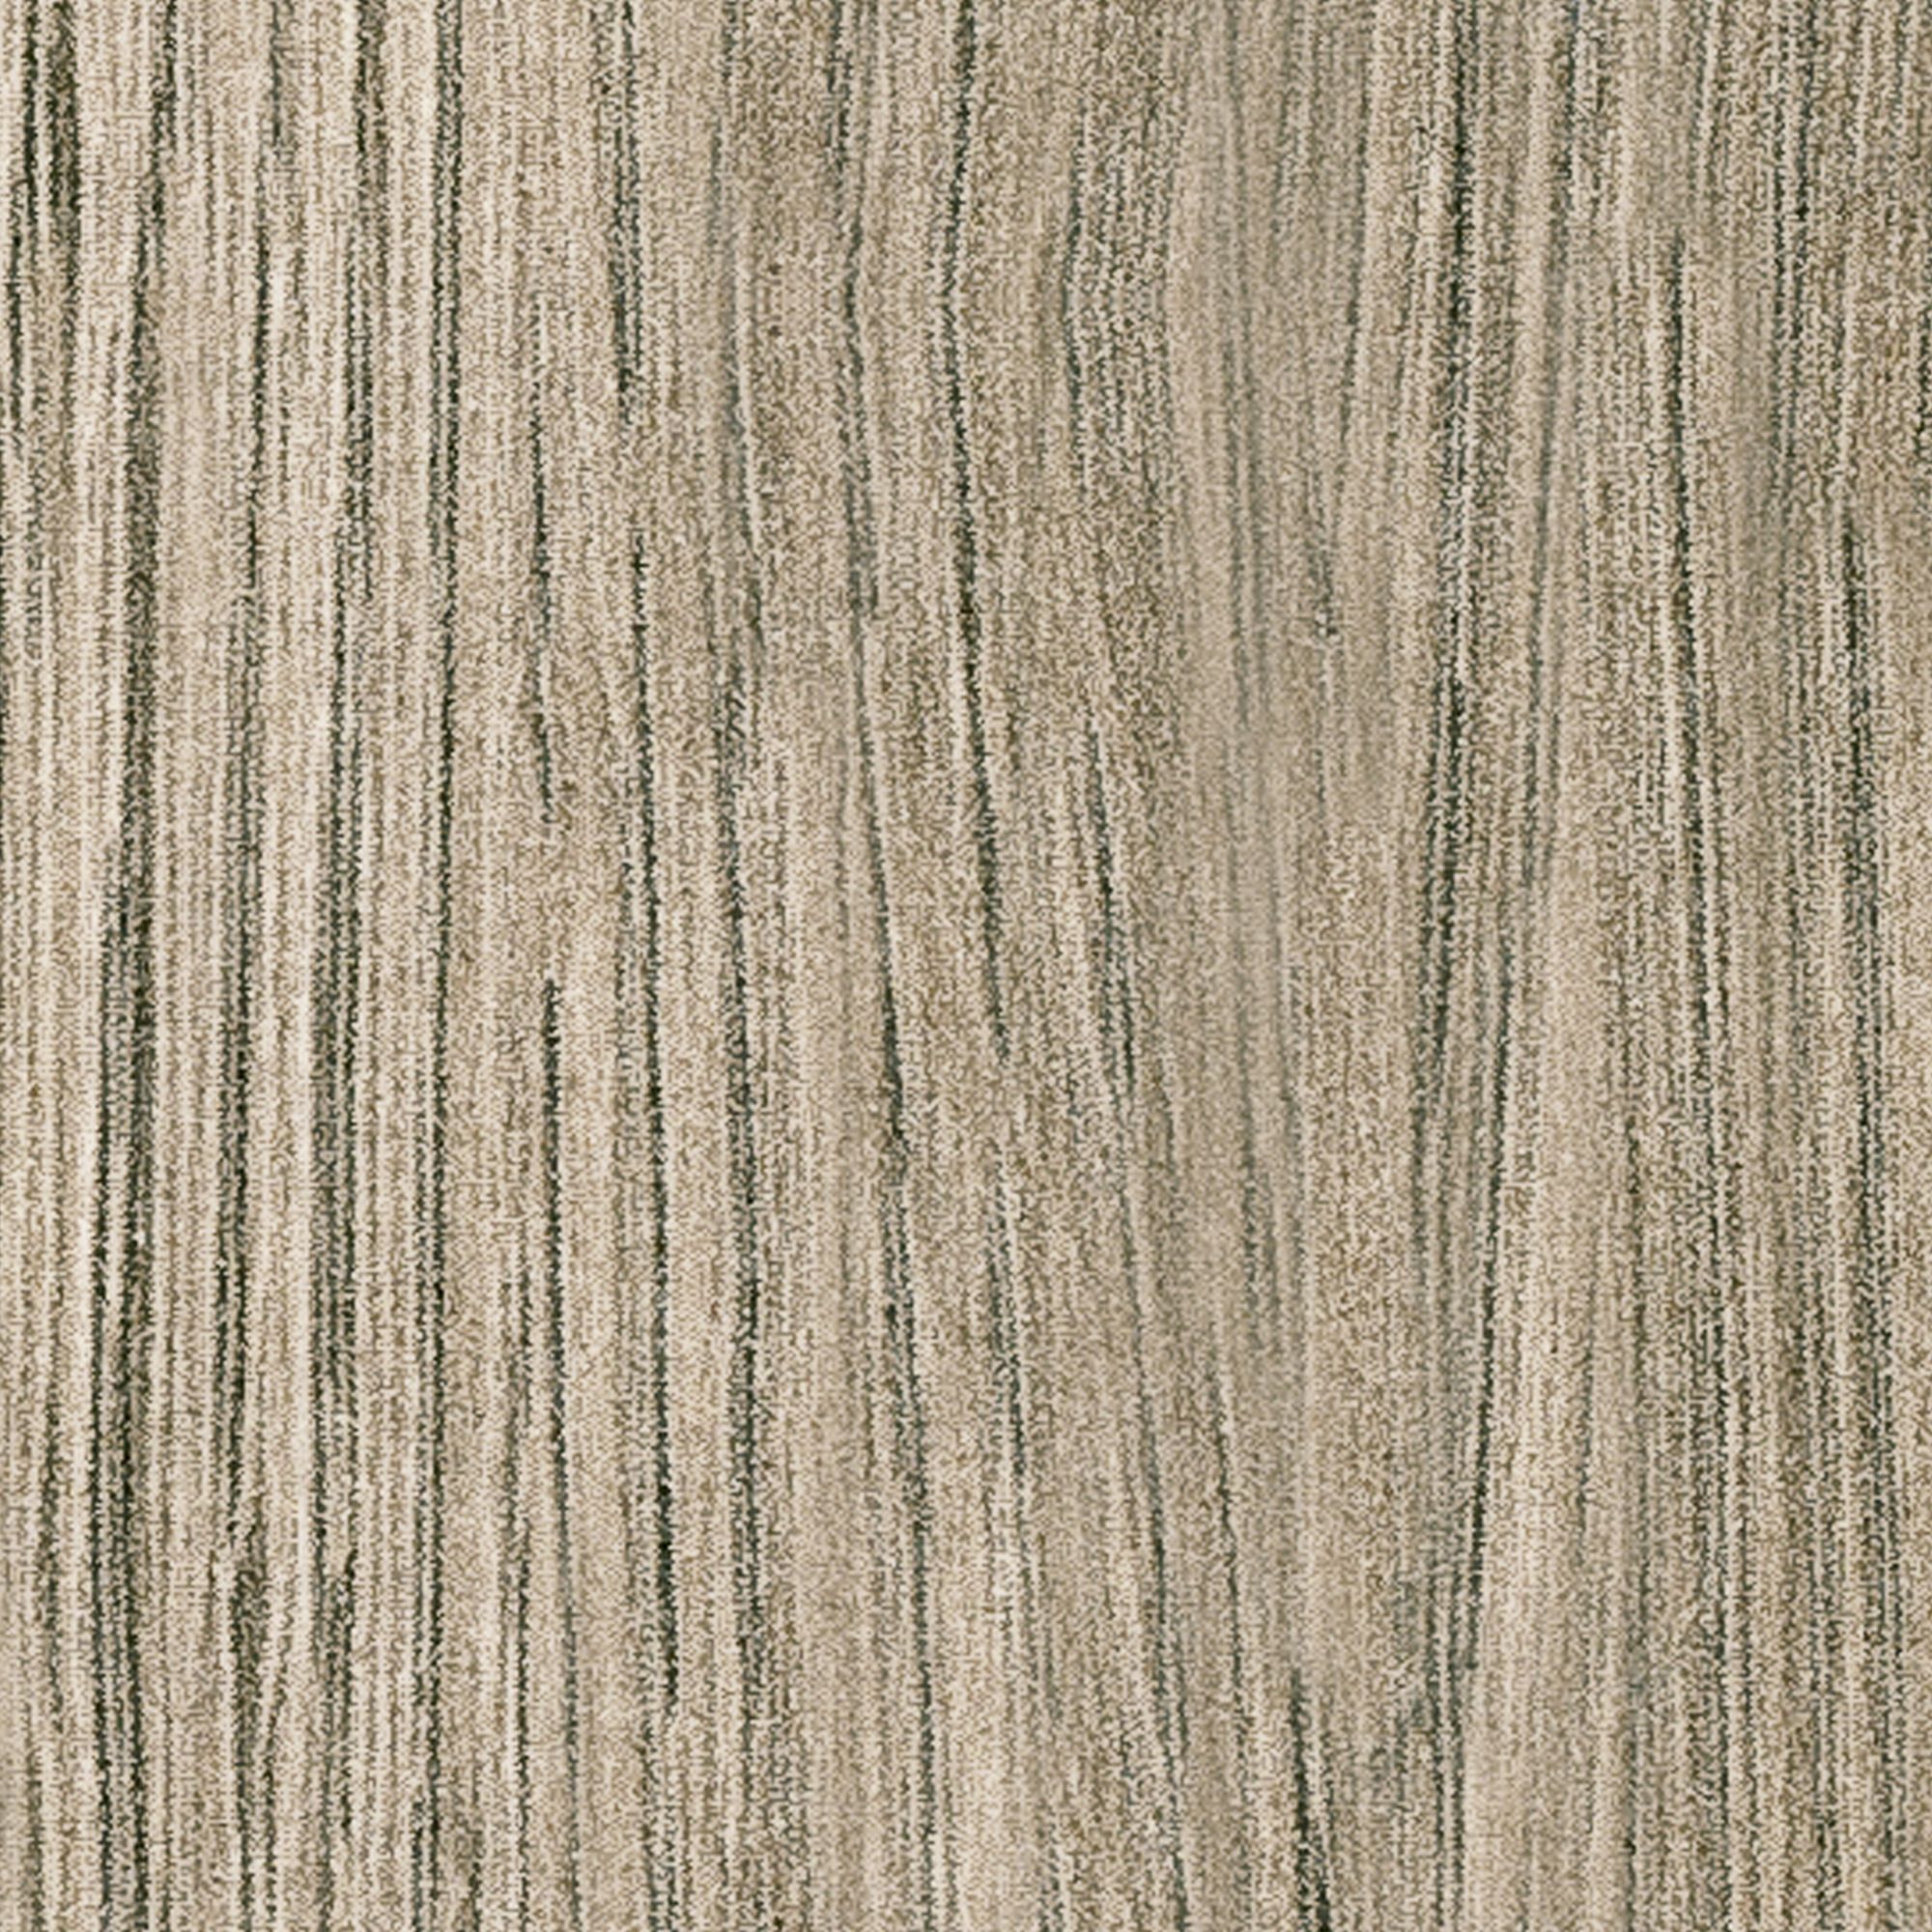 GoodHome DECOR175 Wood effect Threshold (L)93cm